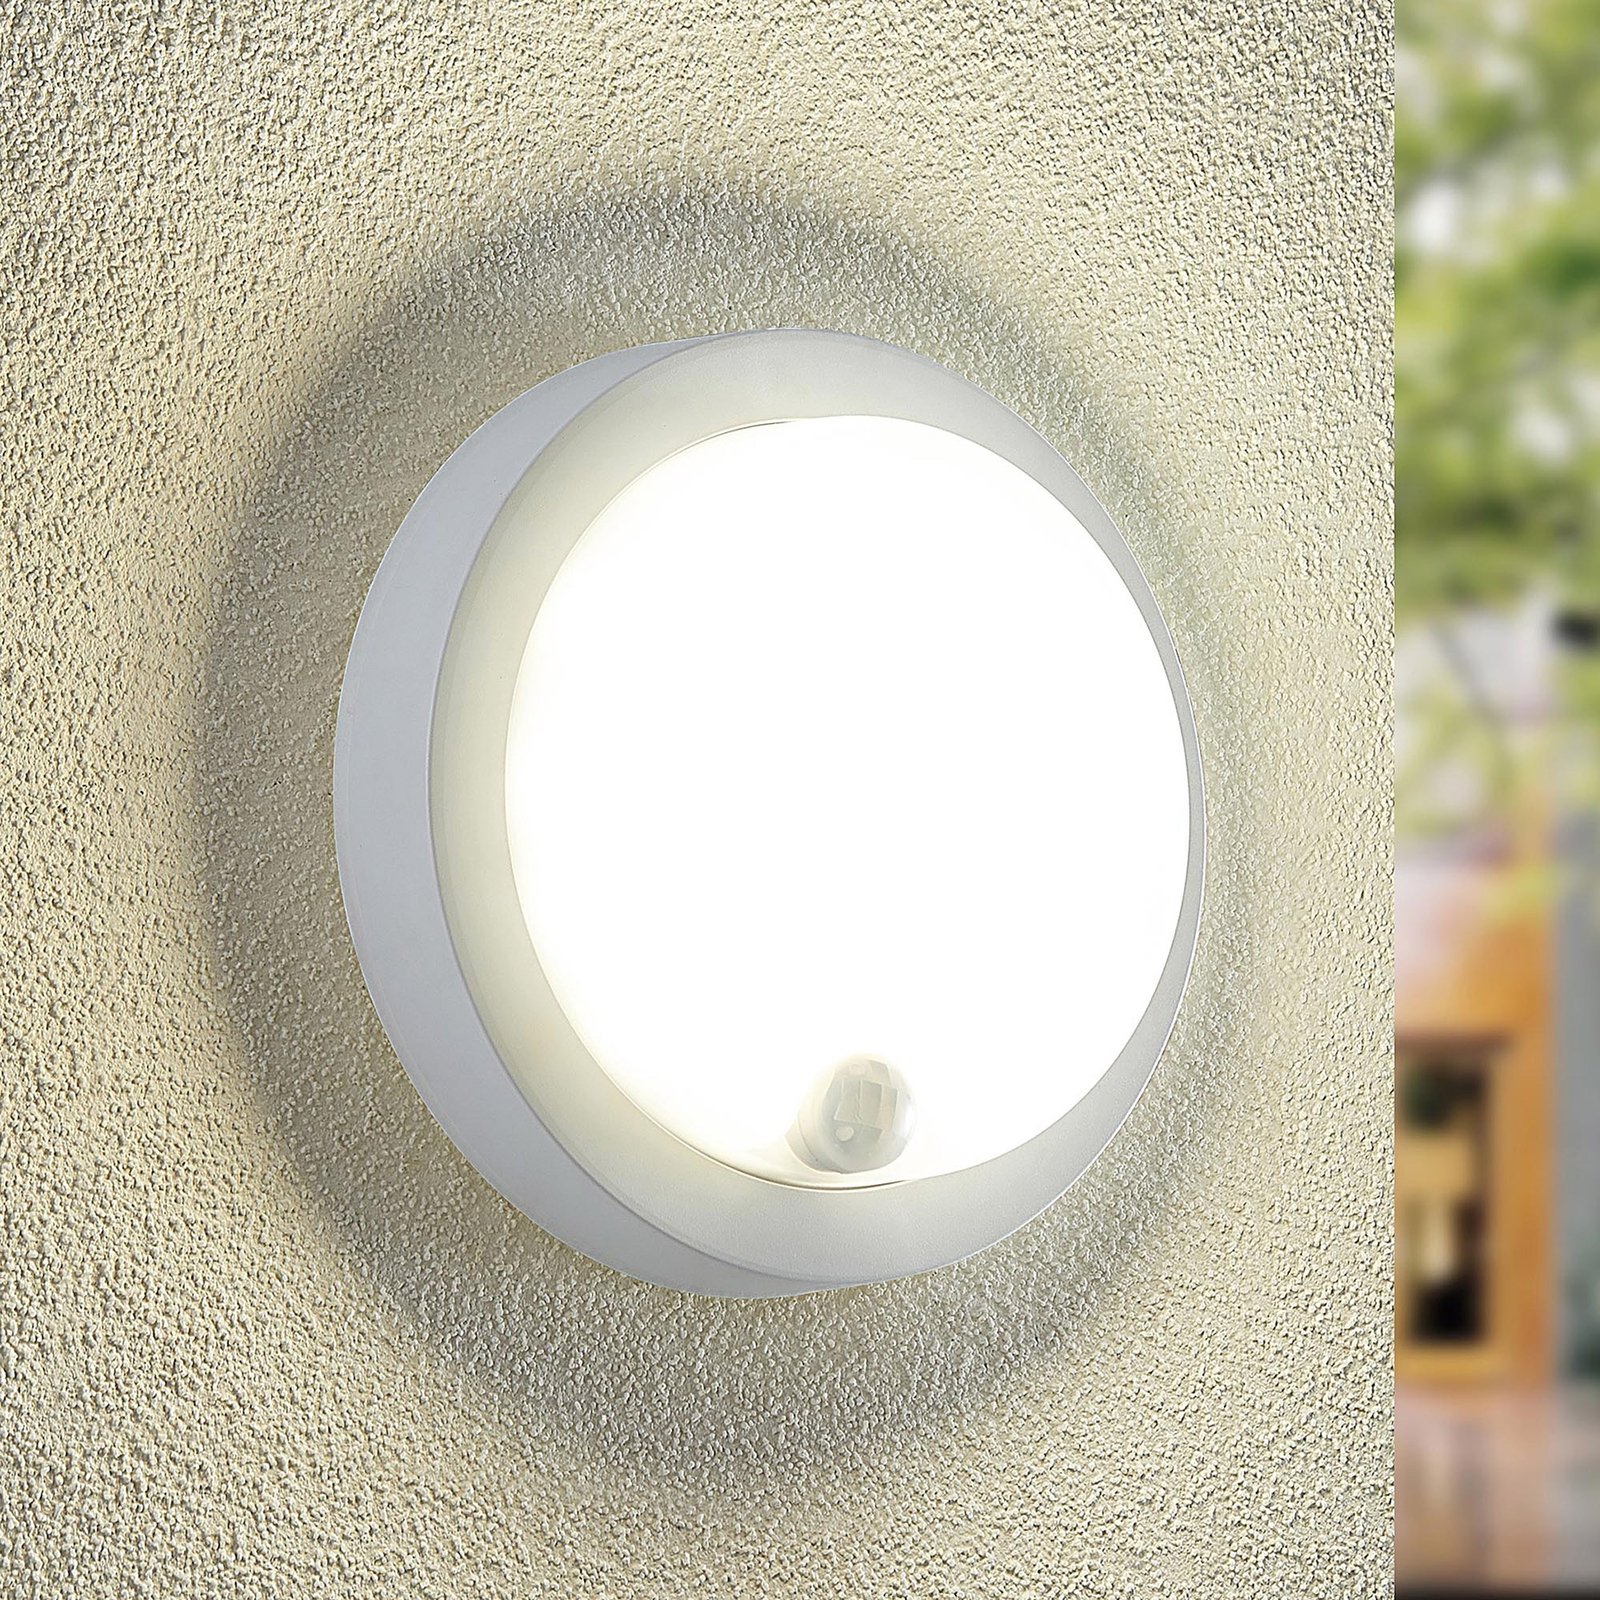 Prios Lakin LED outdoor wall light, sensor, white